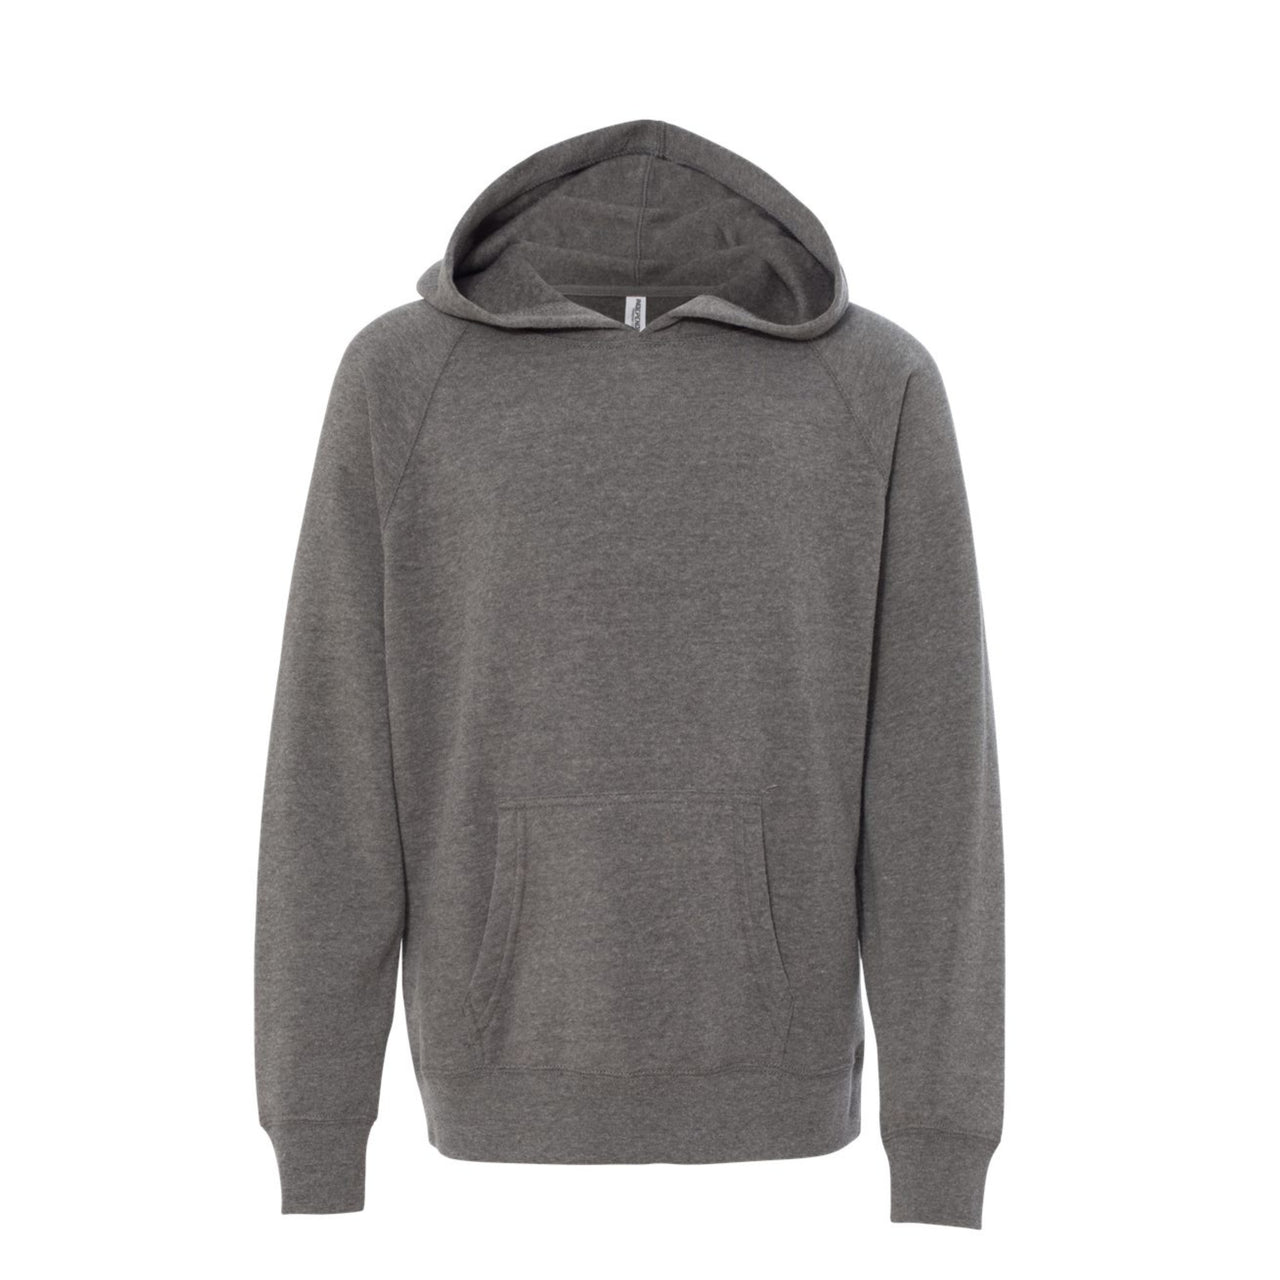 Youth -  Independent Trading Unisex Raglan Hooded Sweatshirt (Design of the Week)